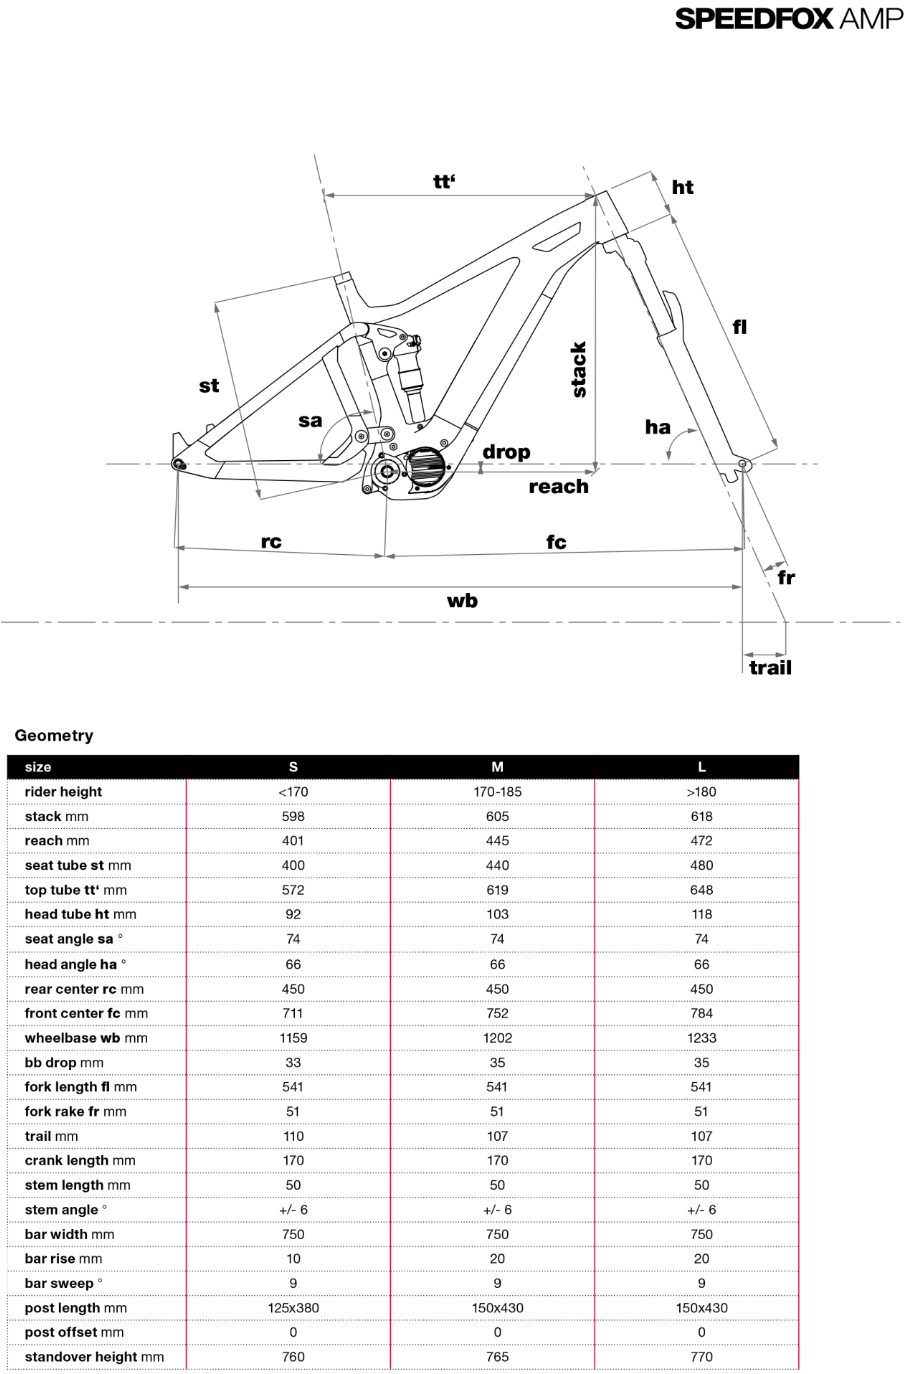 BMC Speedfox AMP geometry chart